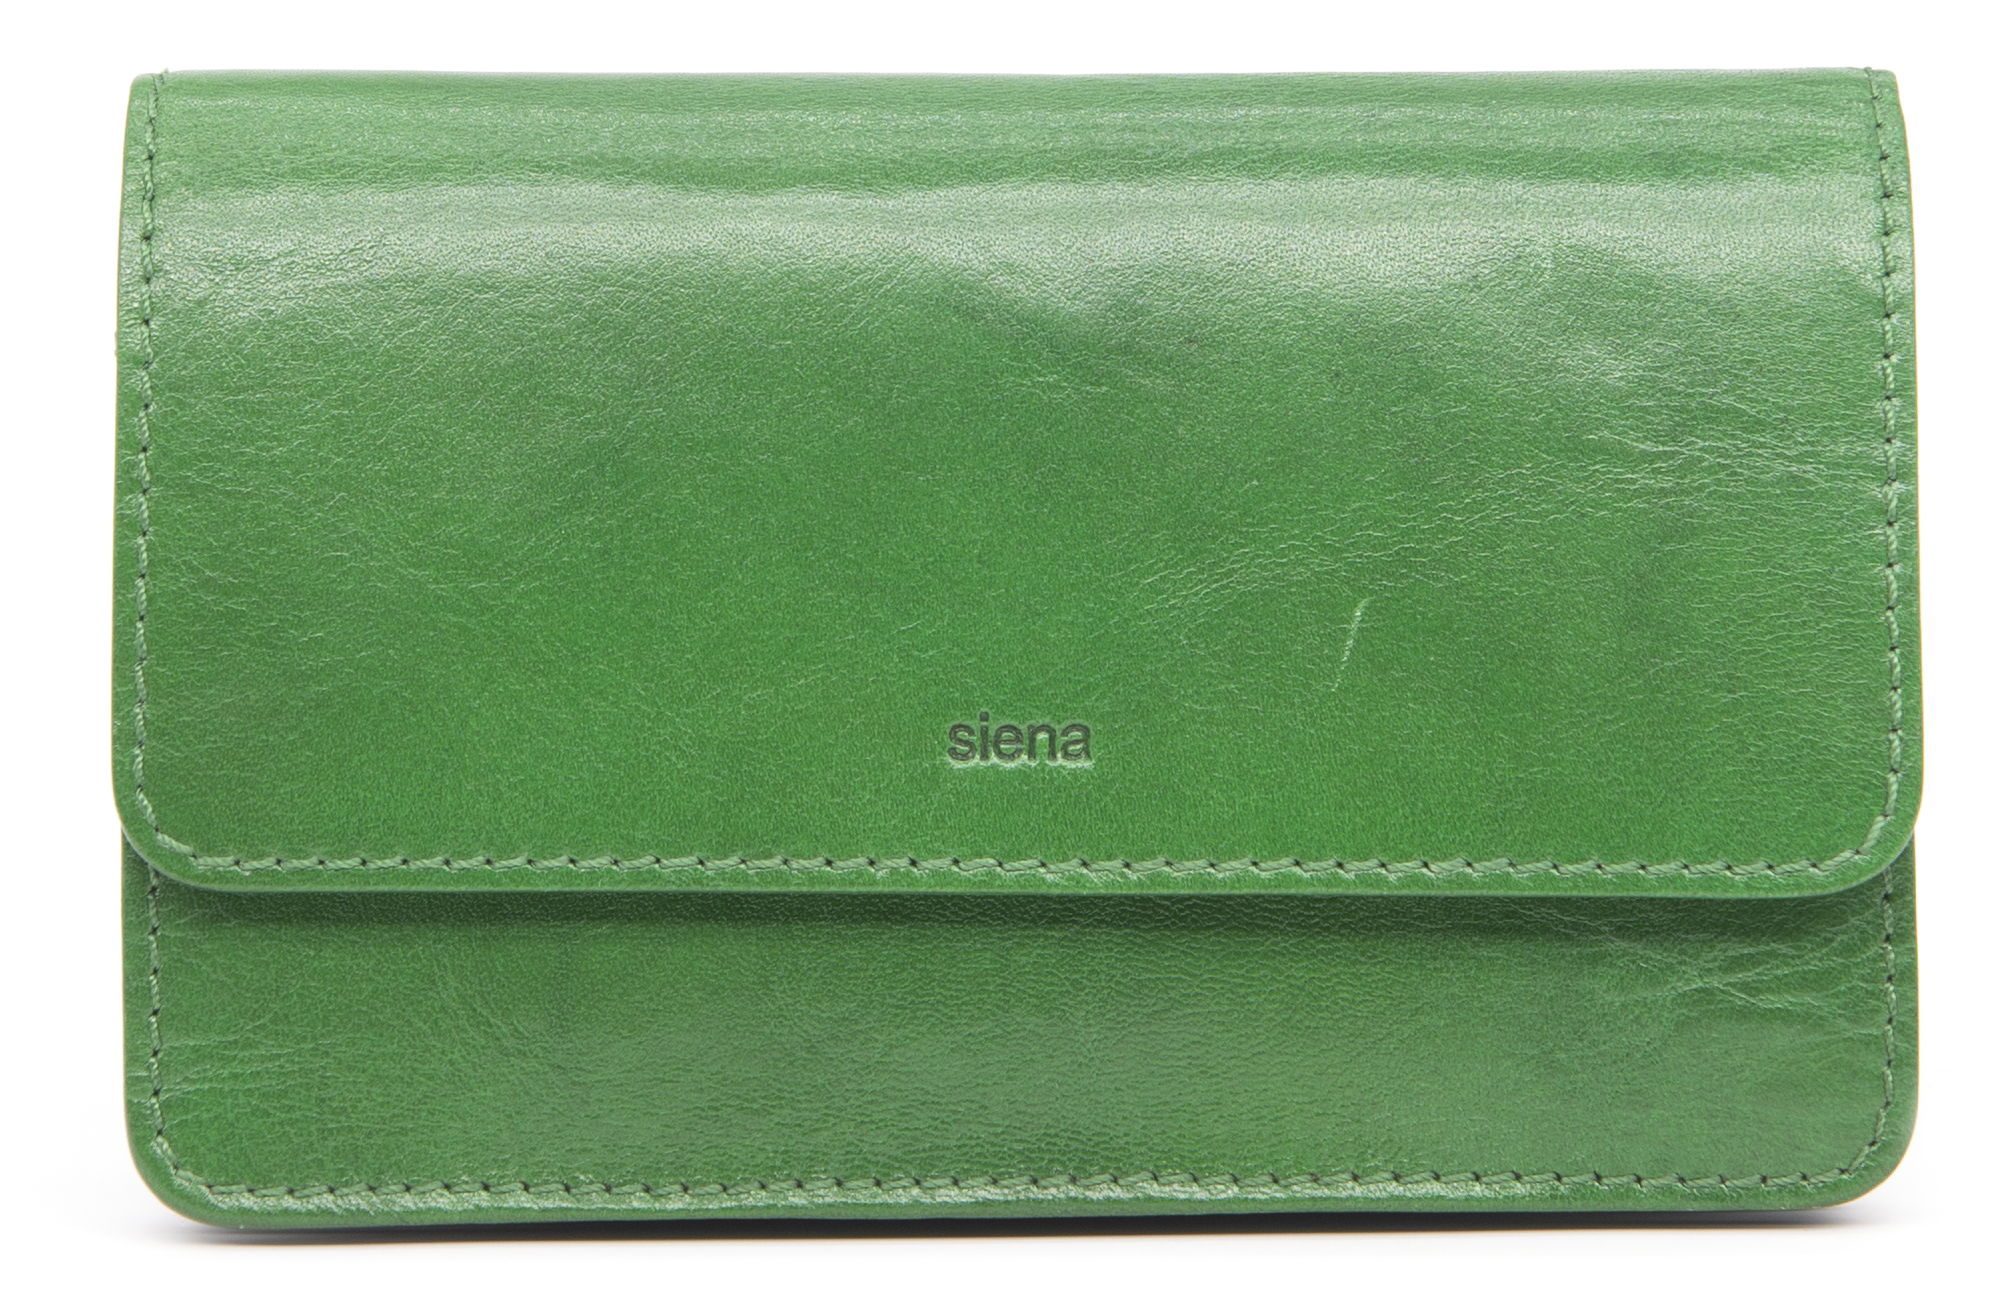 Golunski Oak Leather Men's Wallet 7-9320 Brown